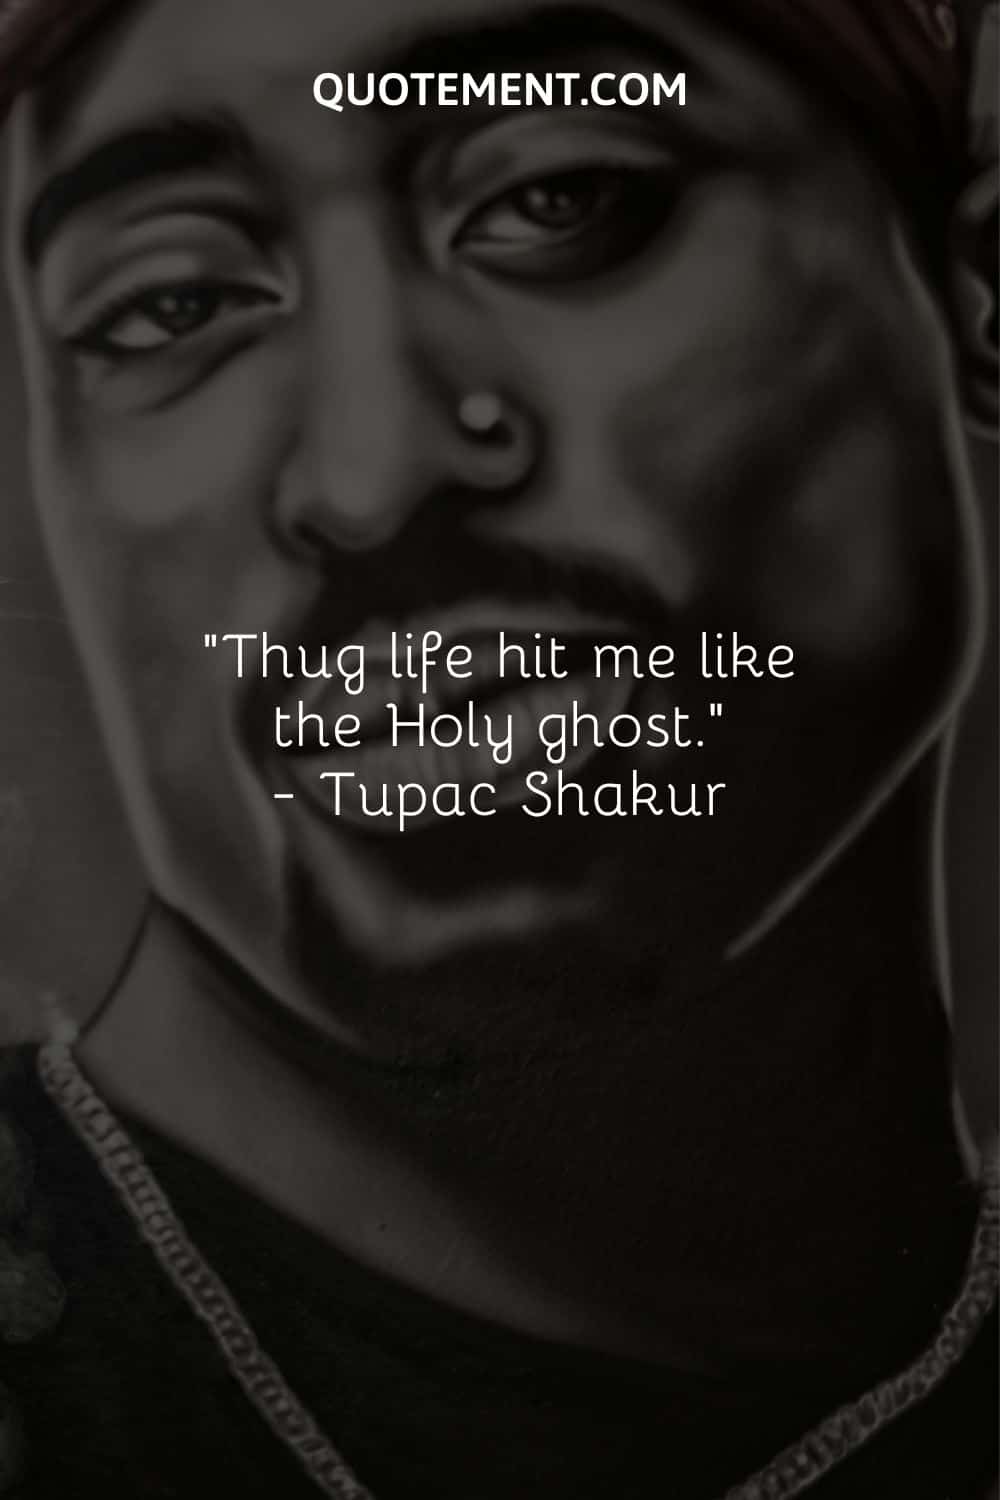 Thug life hit me like the Holy ghost